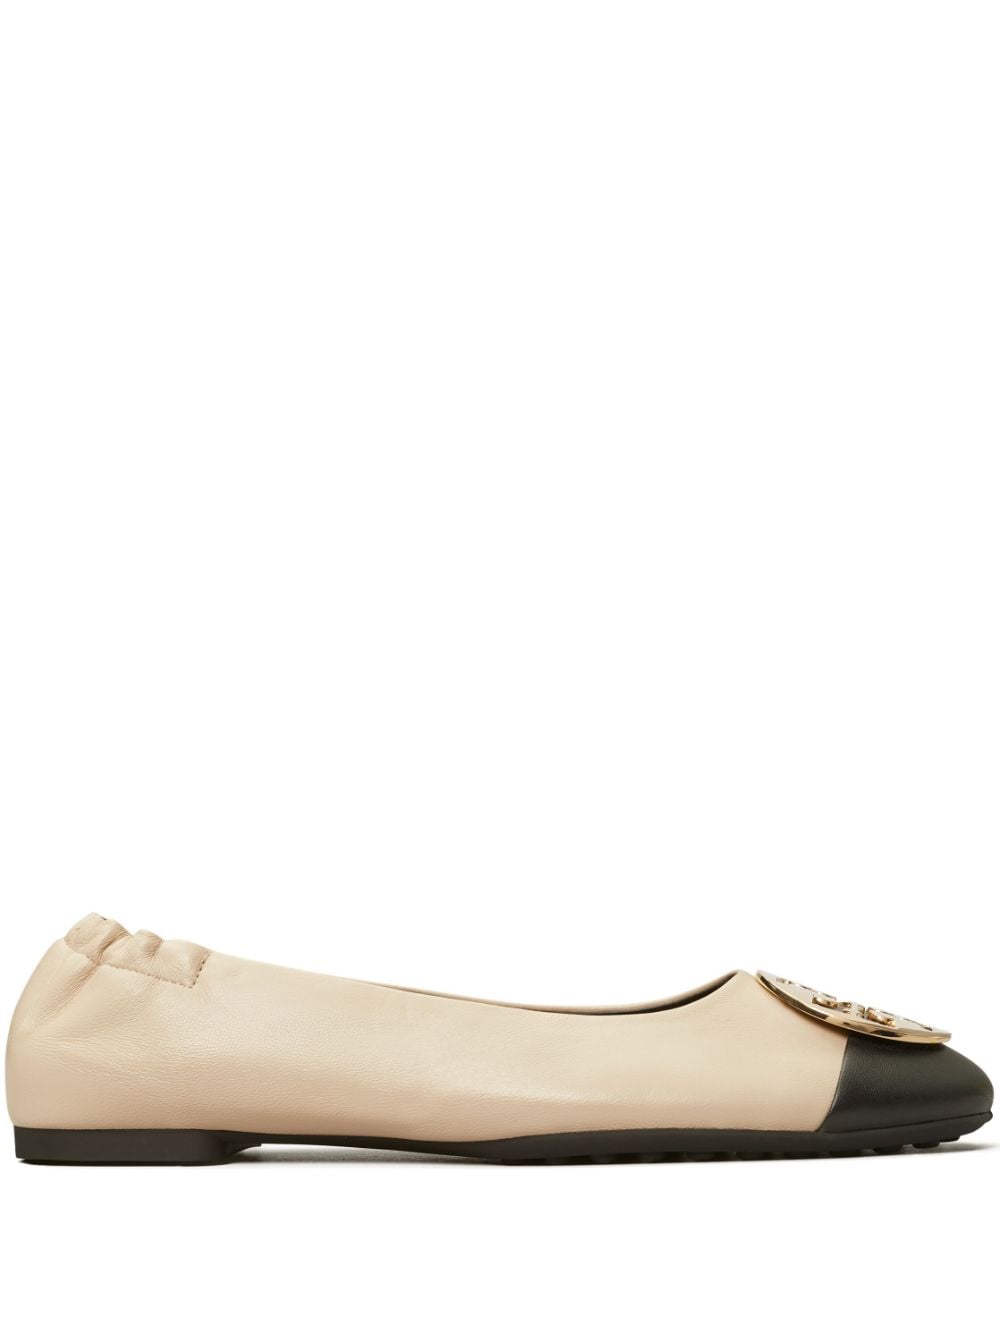 Tory Burch Claire cap-toe ballerina shoes - Neutrals von Tory Burch